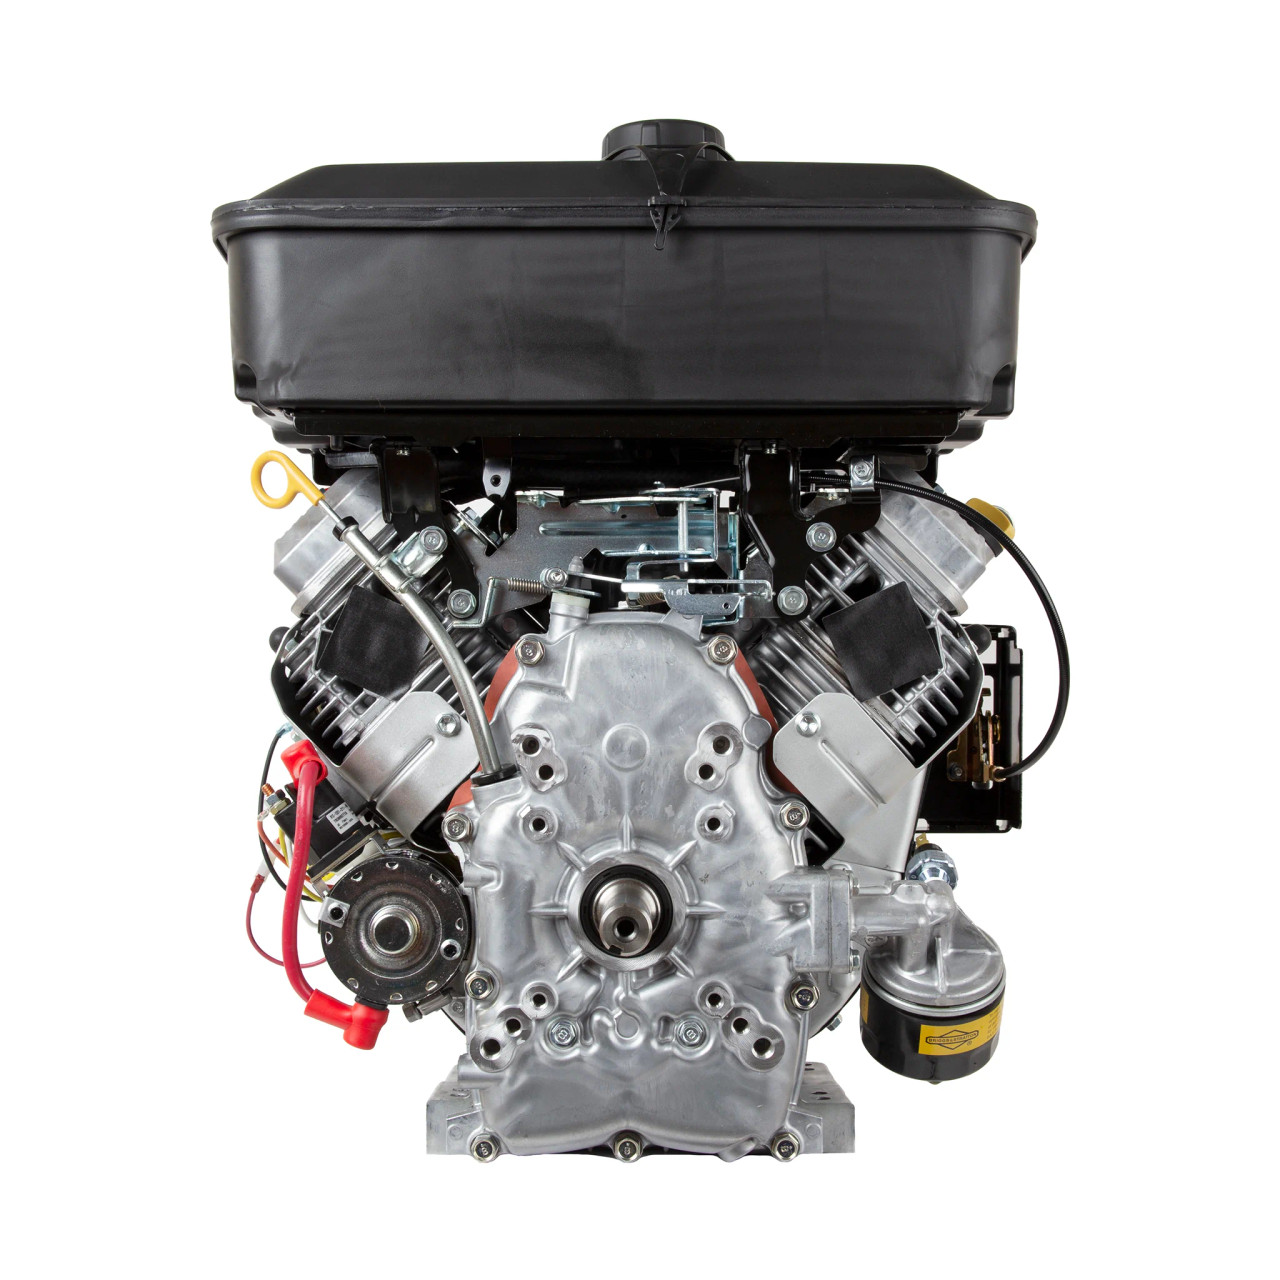 Vanguard® 18.0 HP 570cc Horizontal Shaft Engine 356447-0054-F1